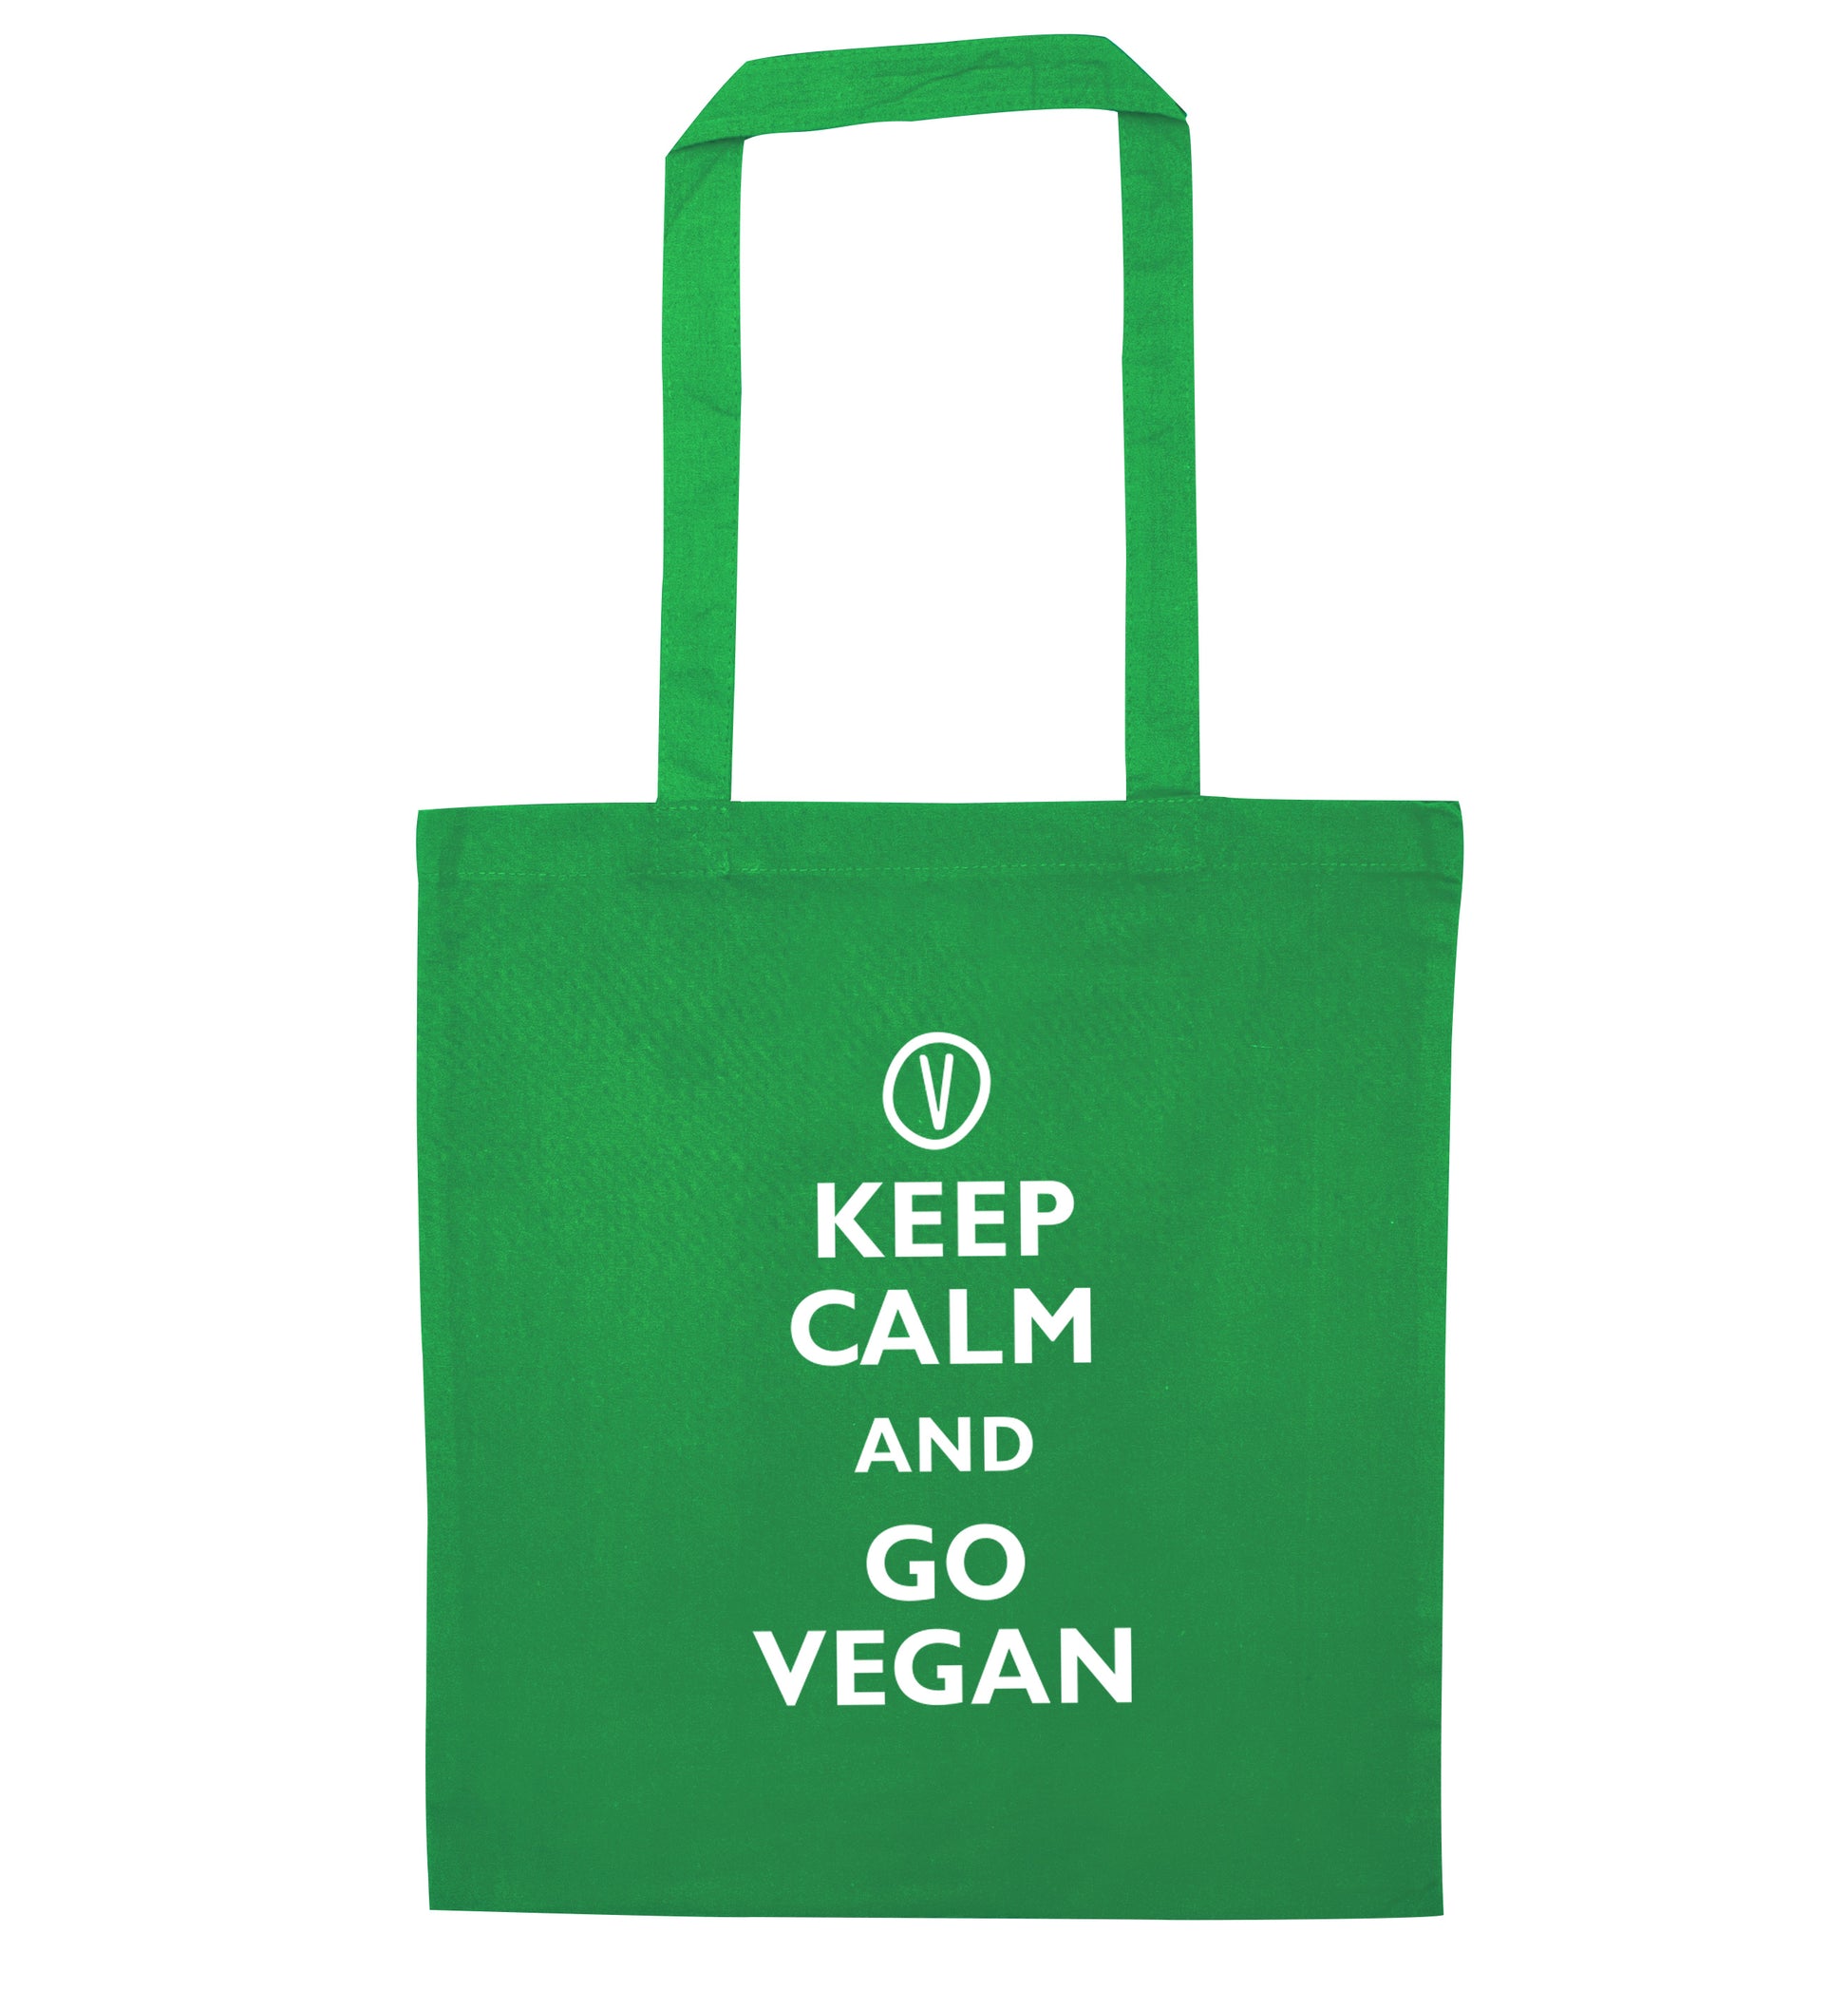 Keep calm and go vegan green tote bag